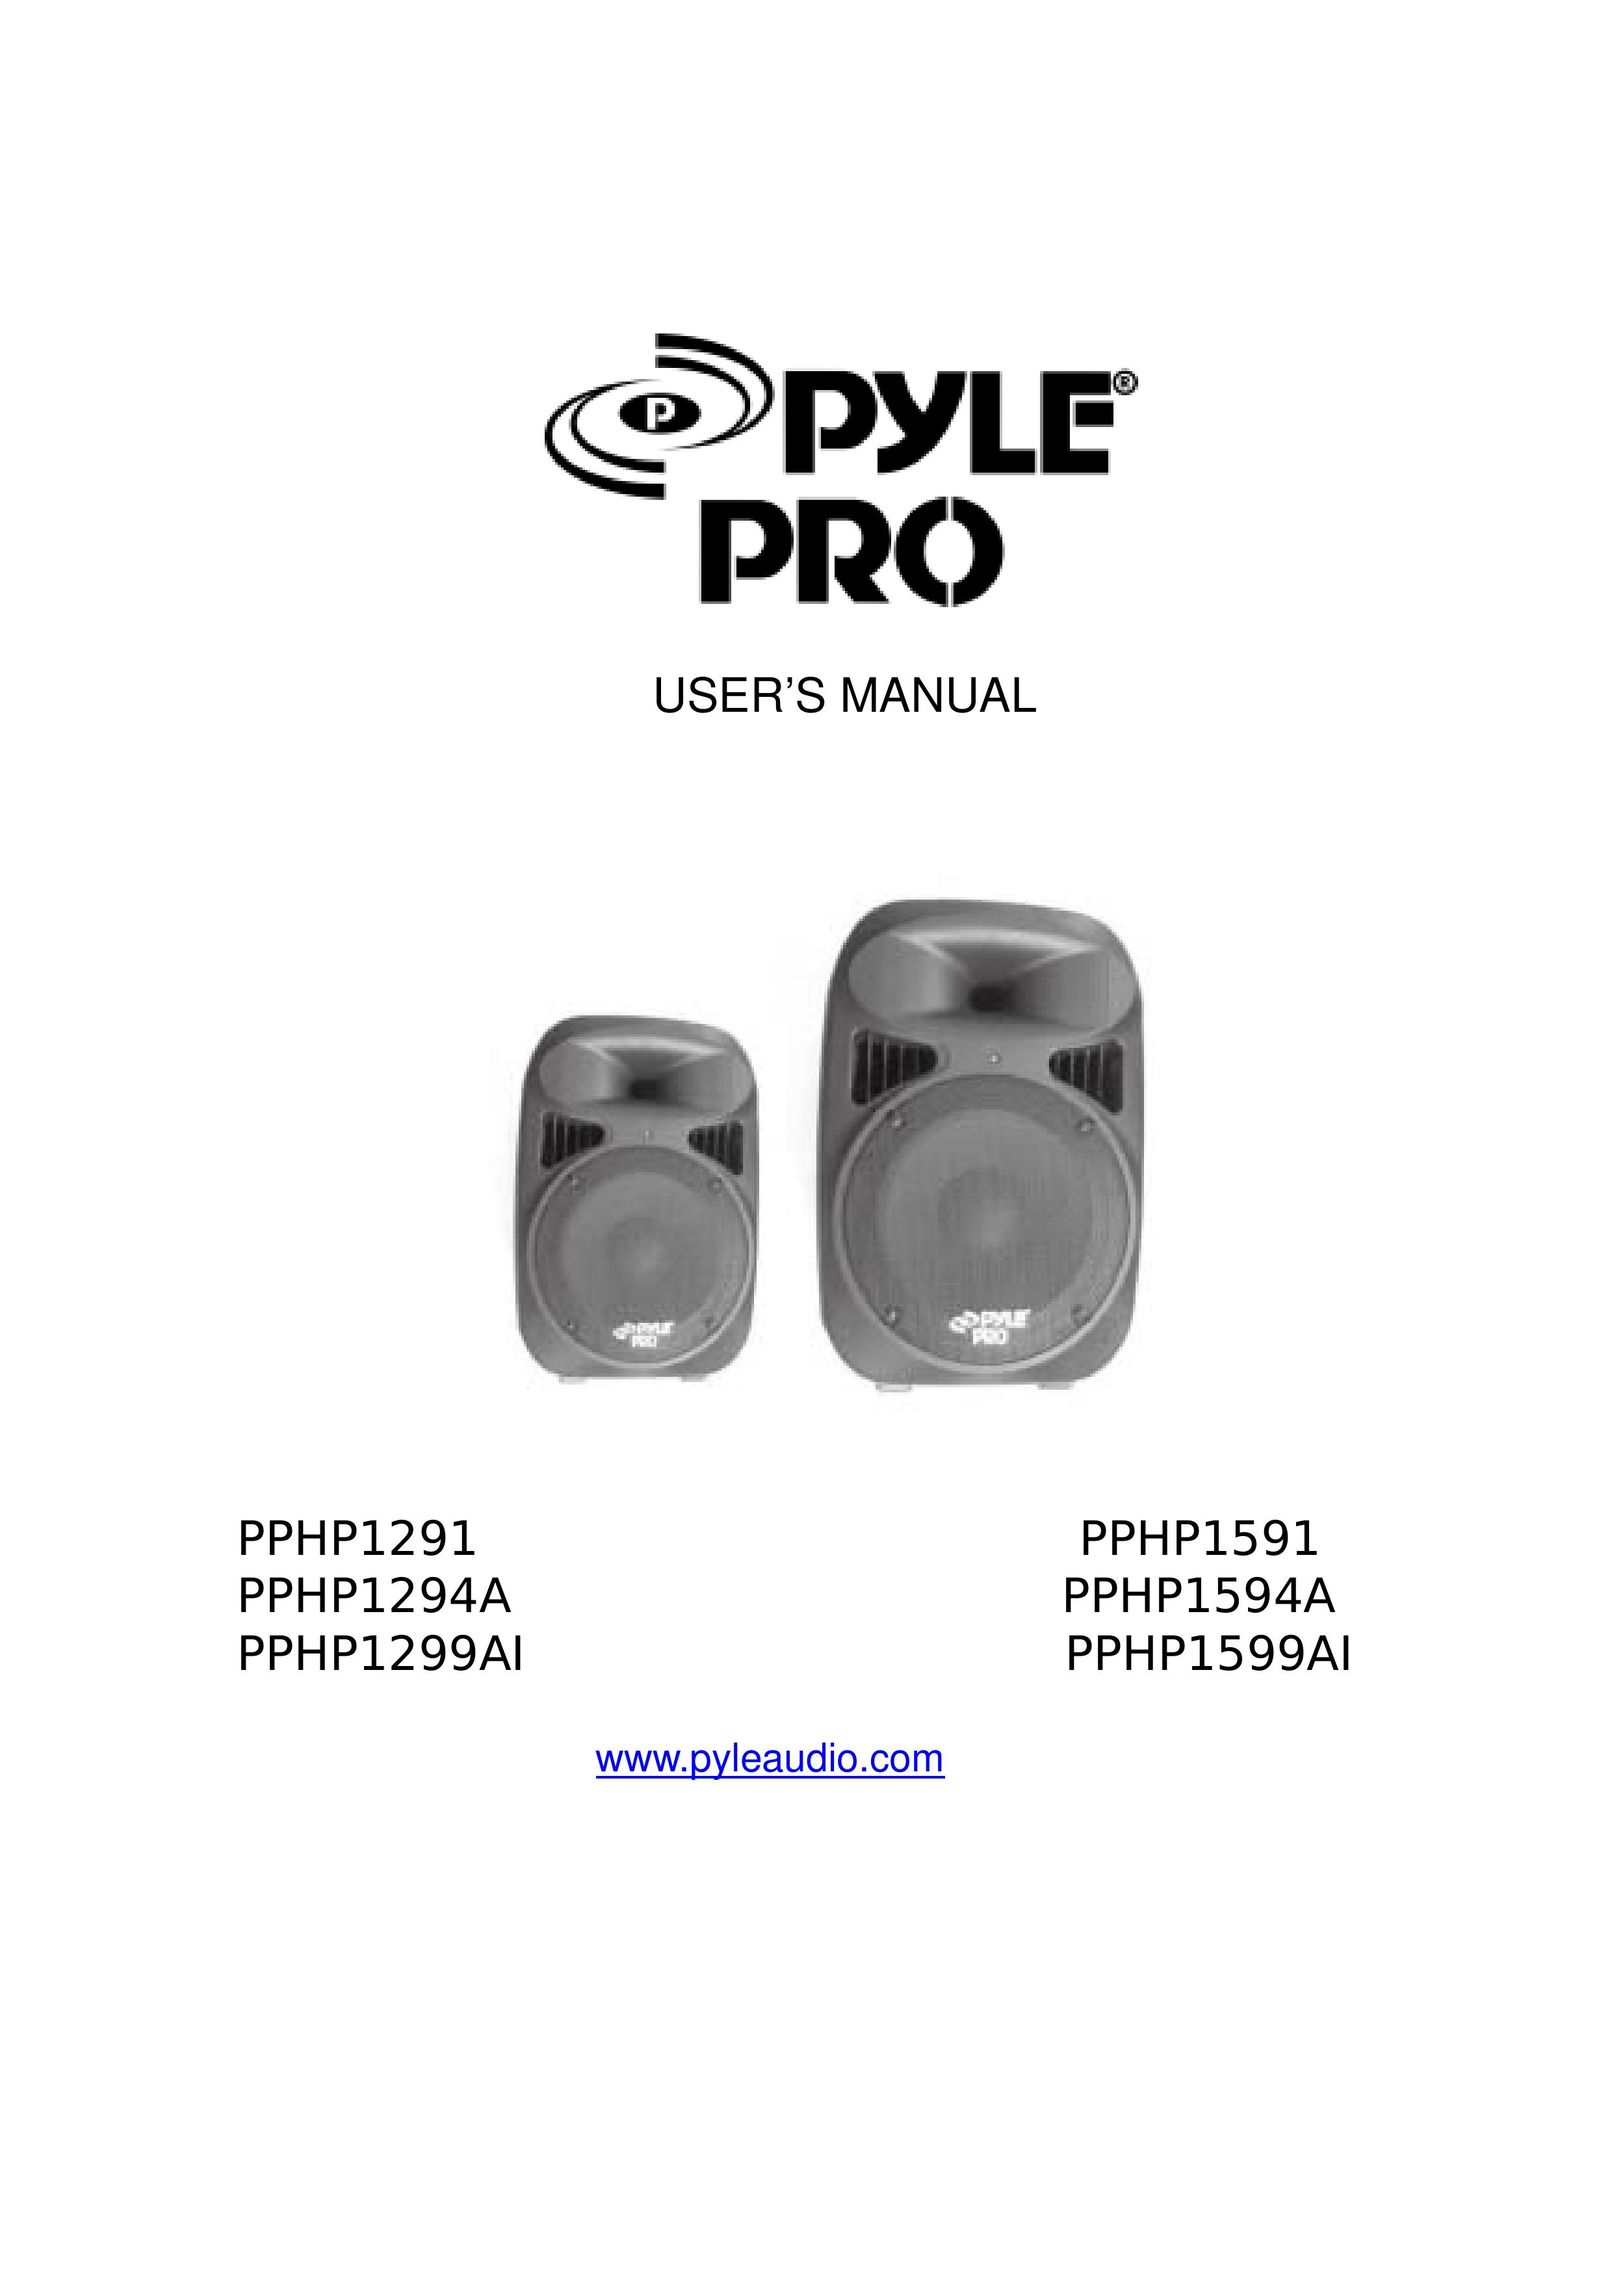 PYLE Audio PPHP1599AI Speaker System User Manual